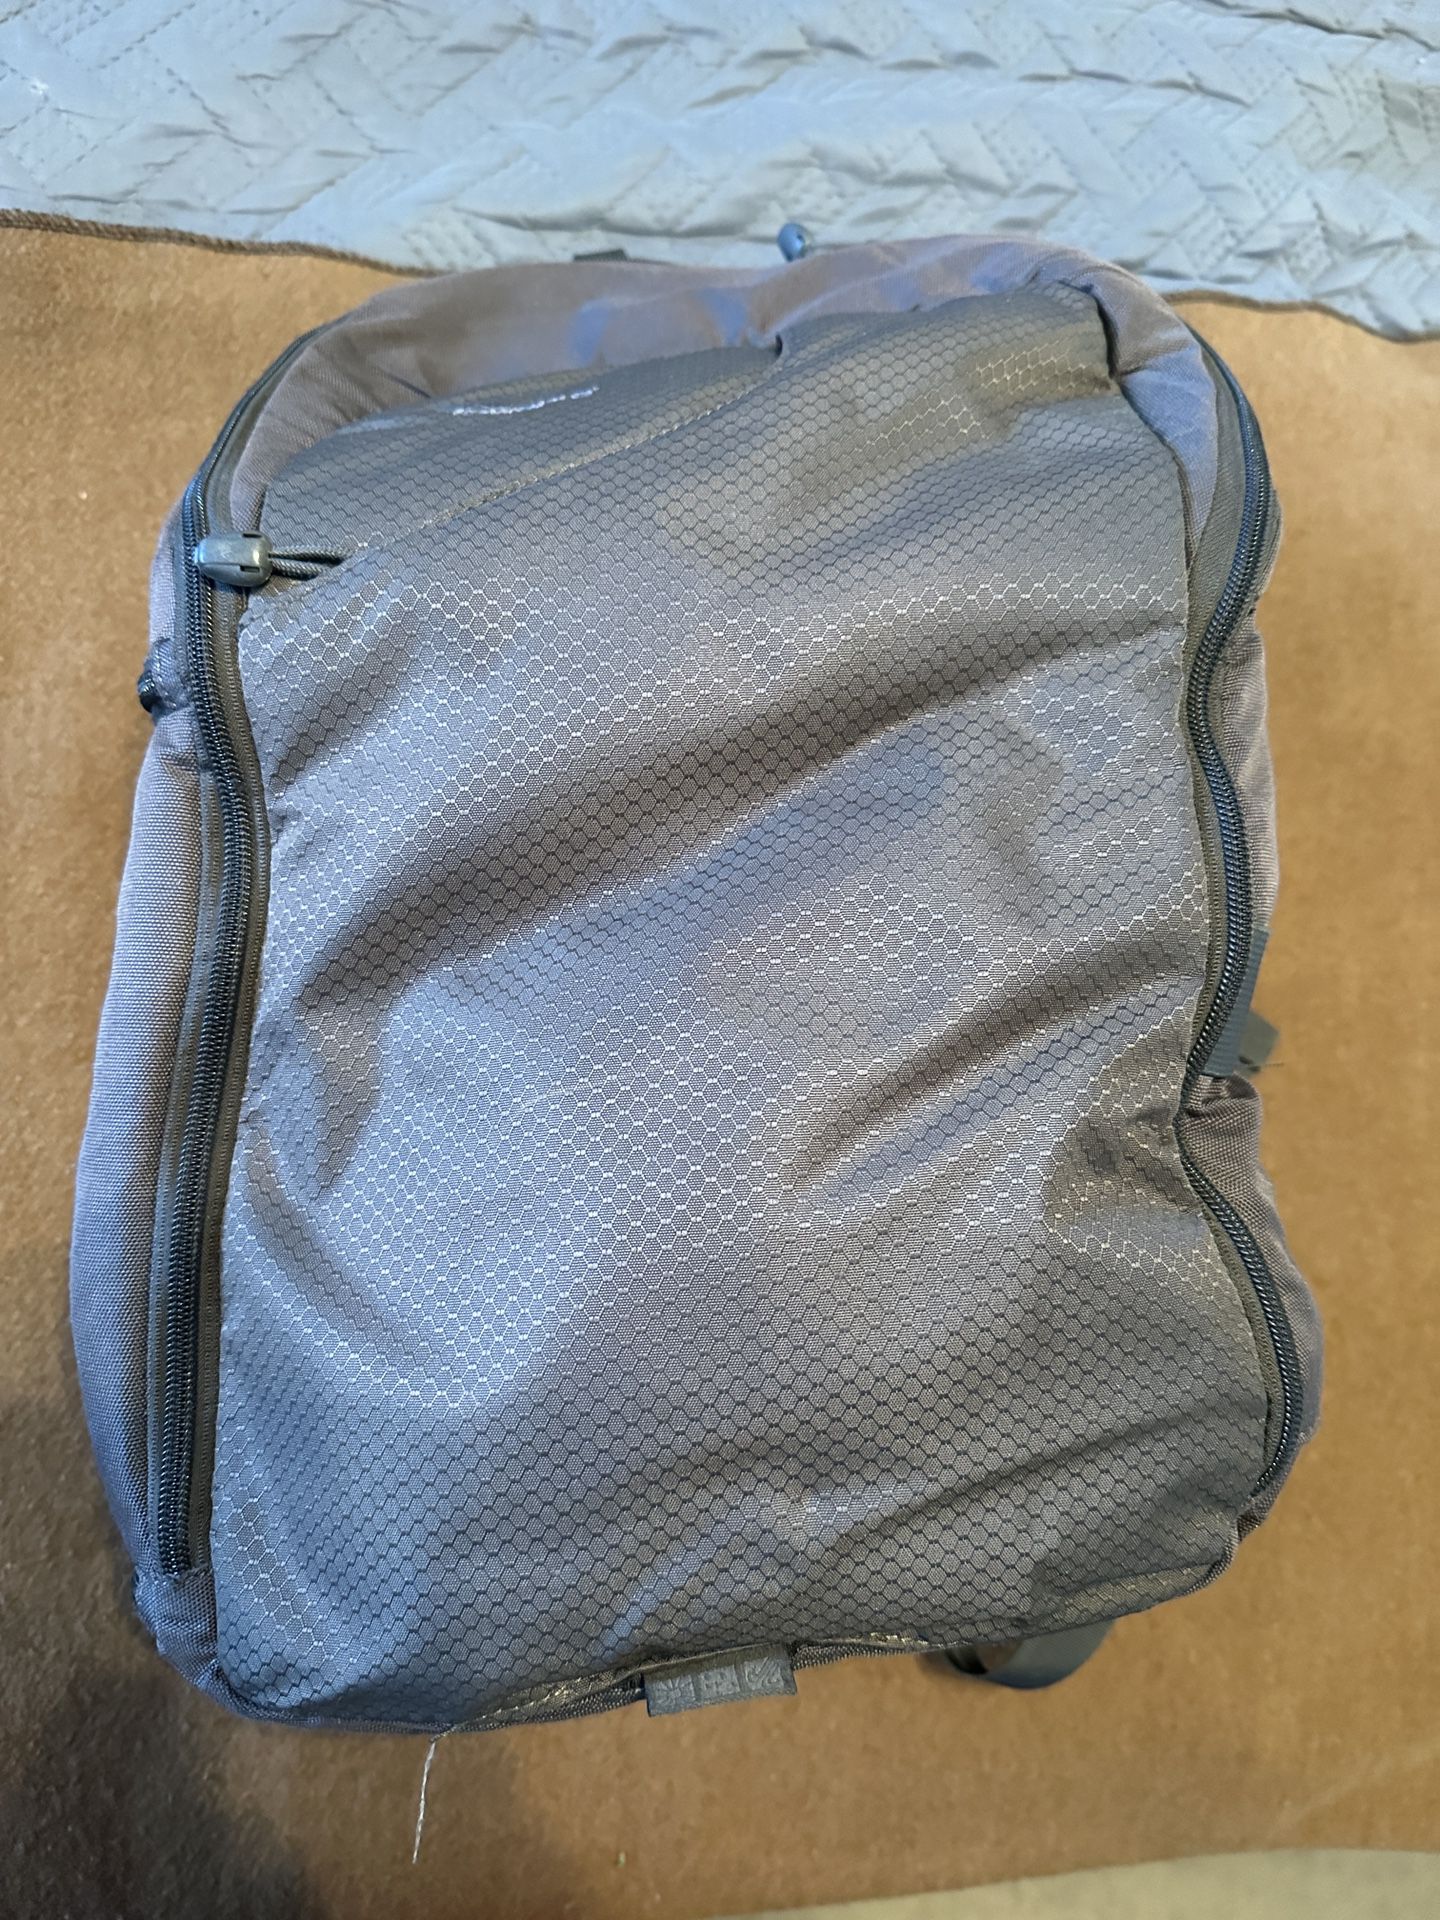 Lowepro Transit Backpack 350 AW (Camera Bag)